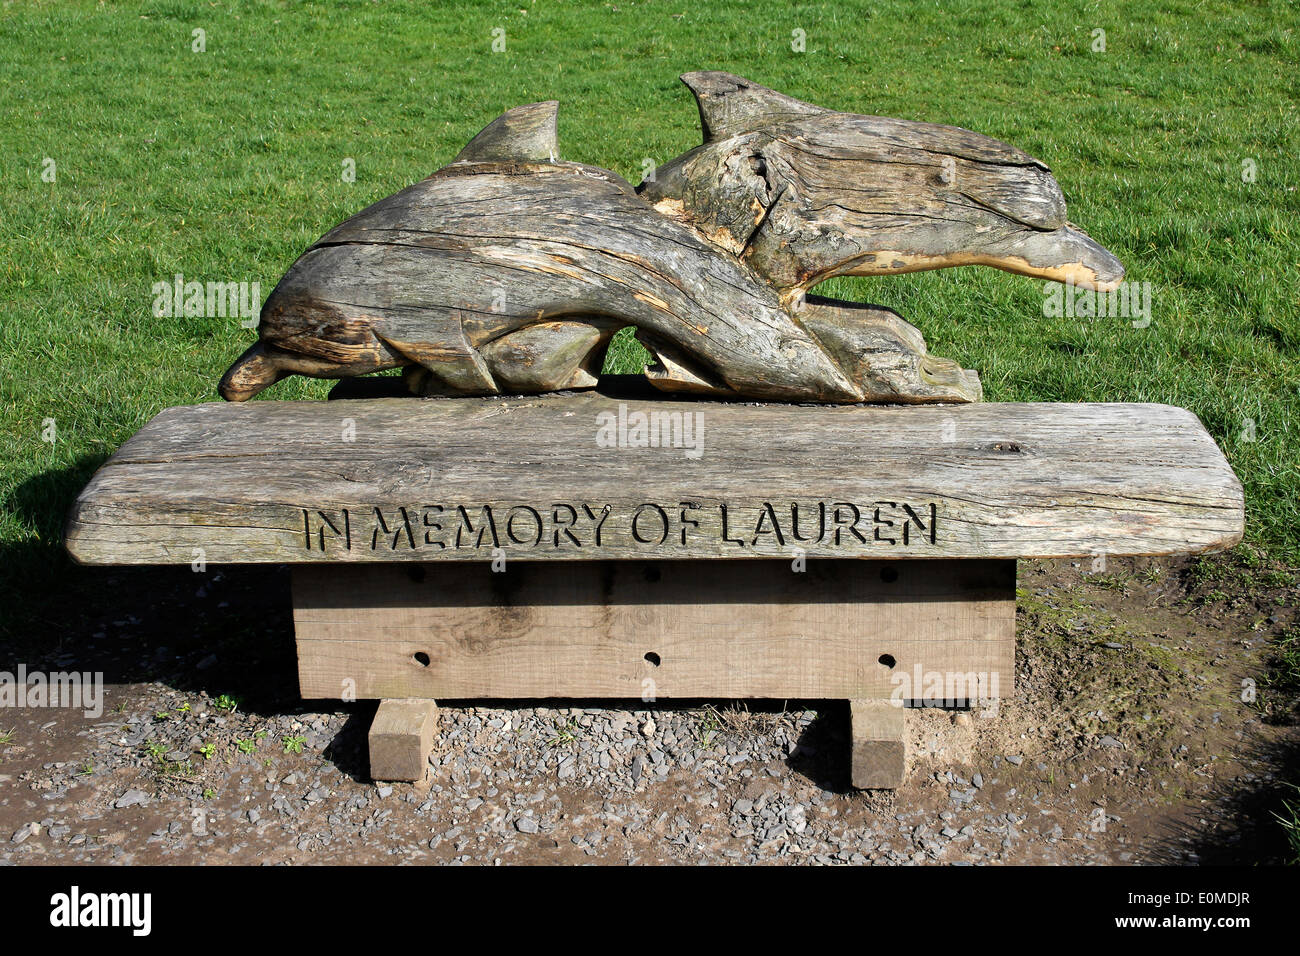 Dolphin Memorial banco de madera "en memoria de Lauren' Foto de stock